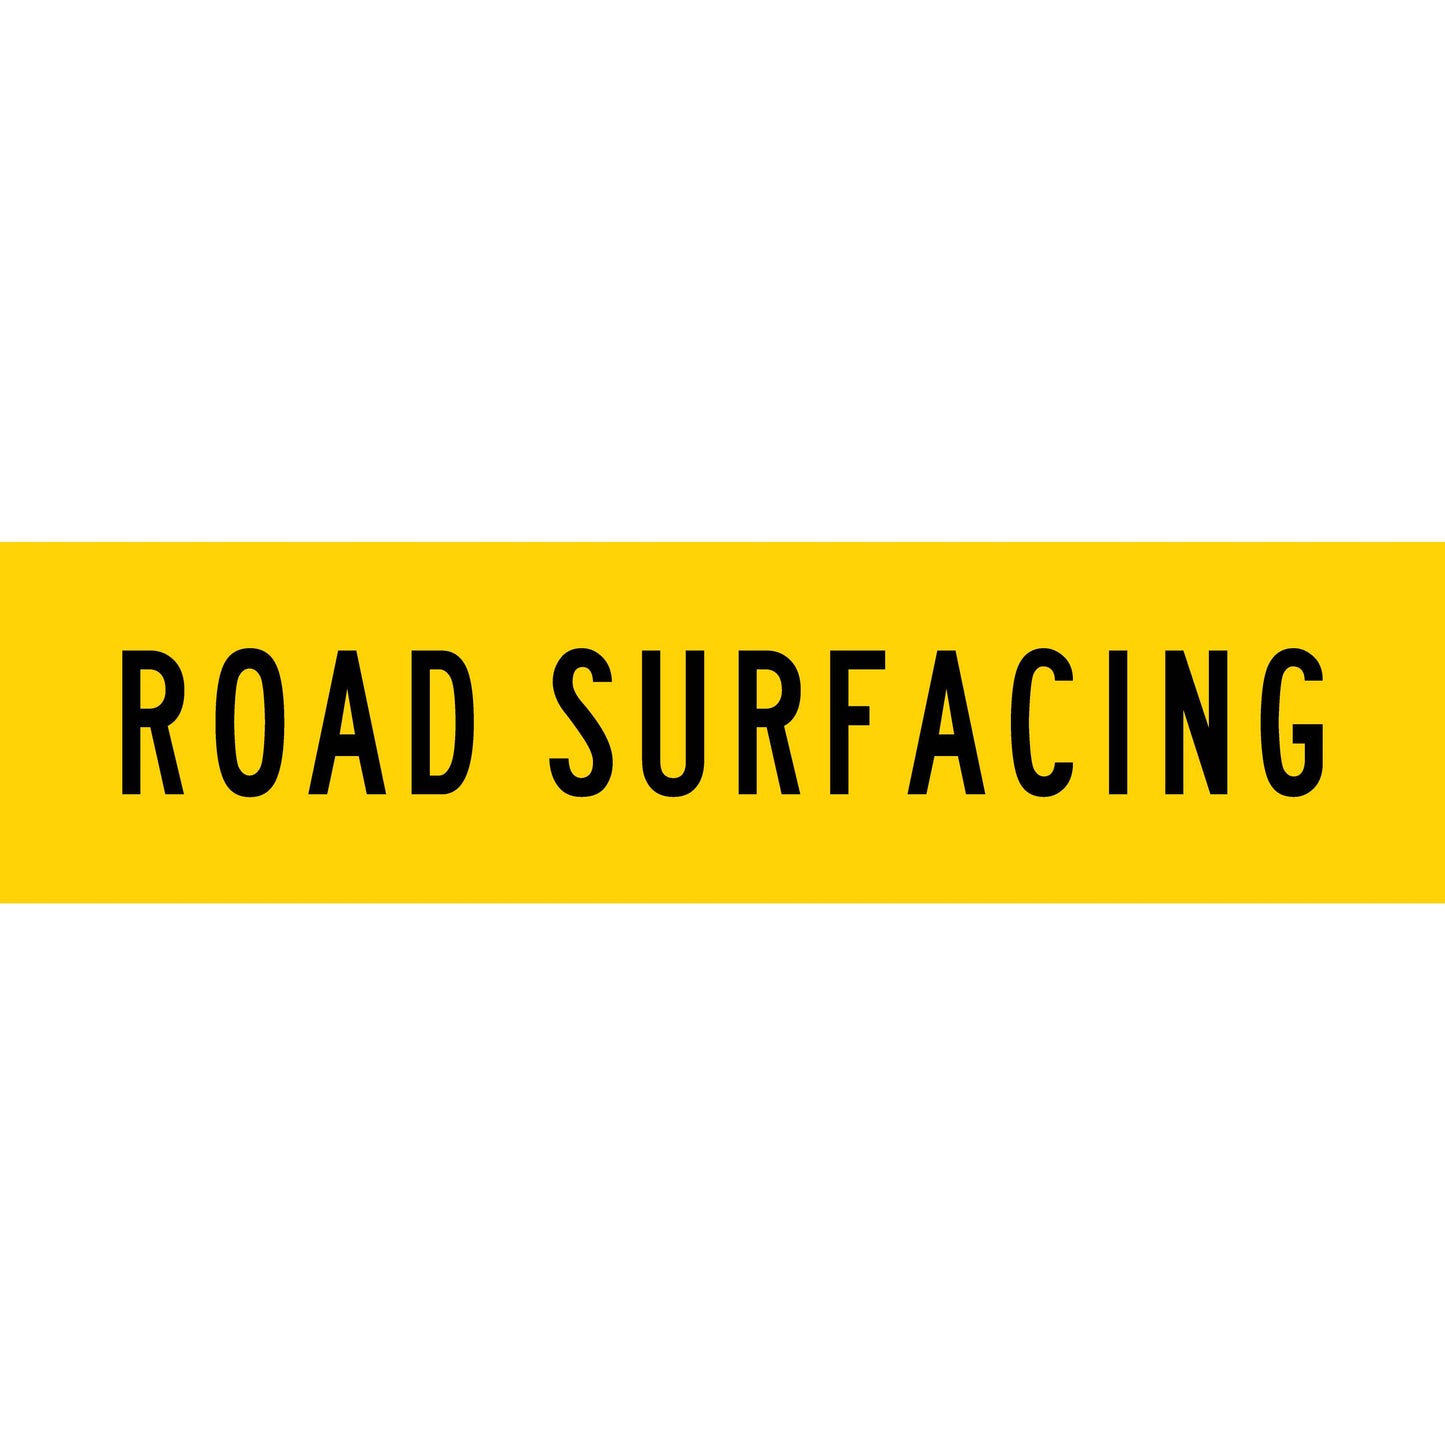 Road Surfacing Long Skinny Multi Message Traffic Sign